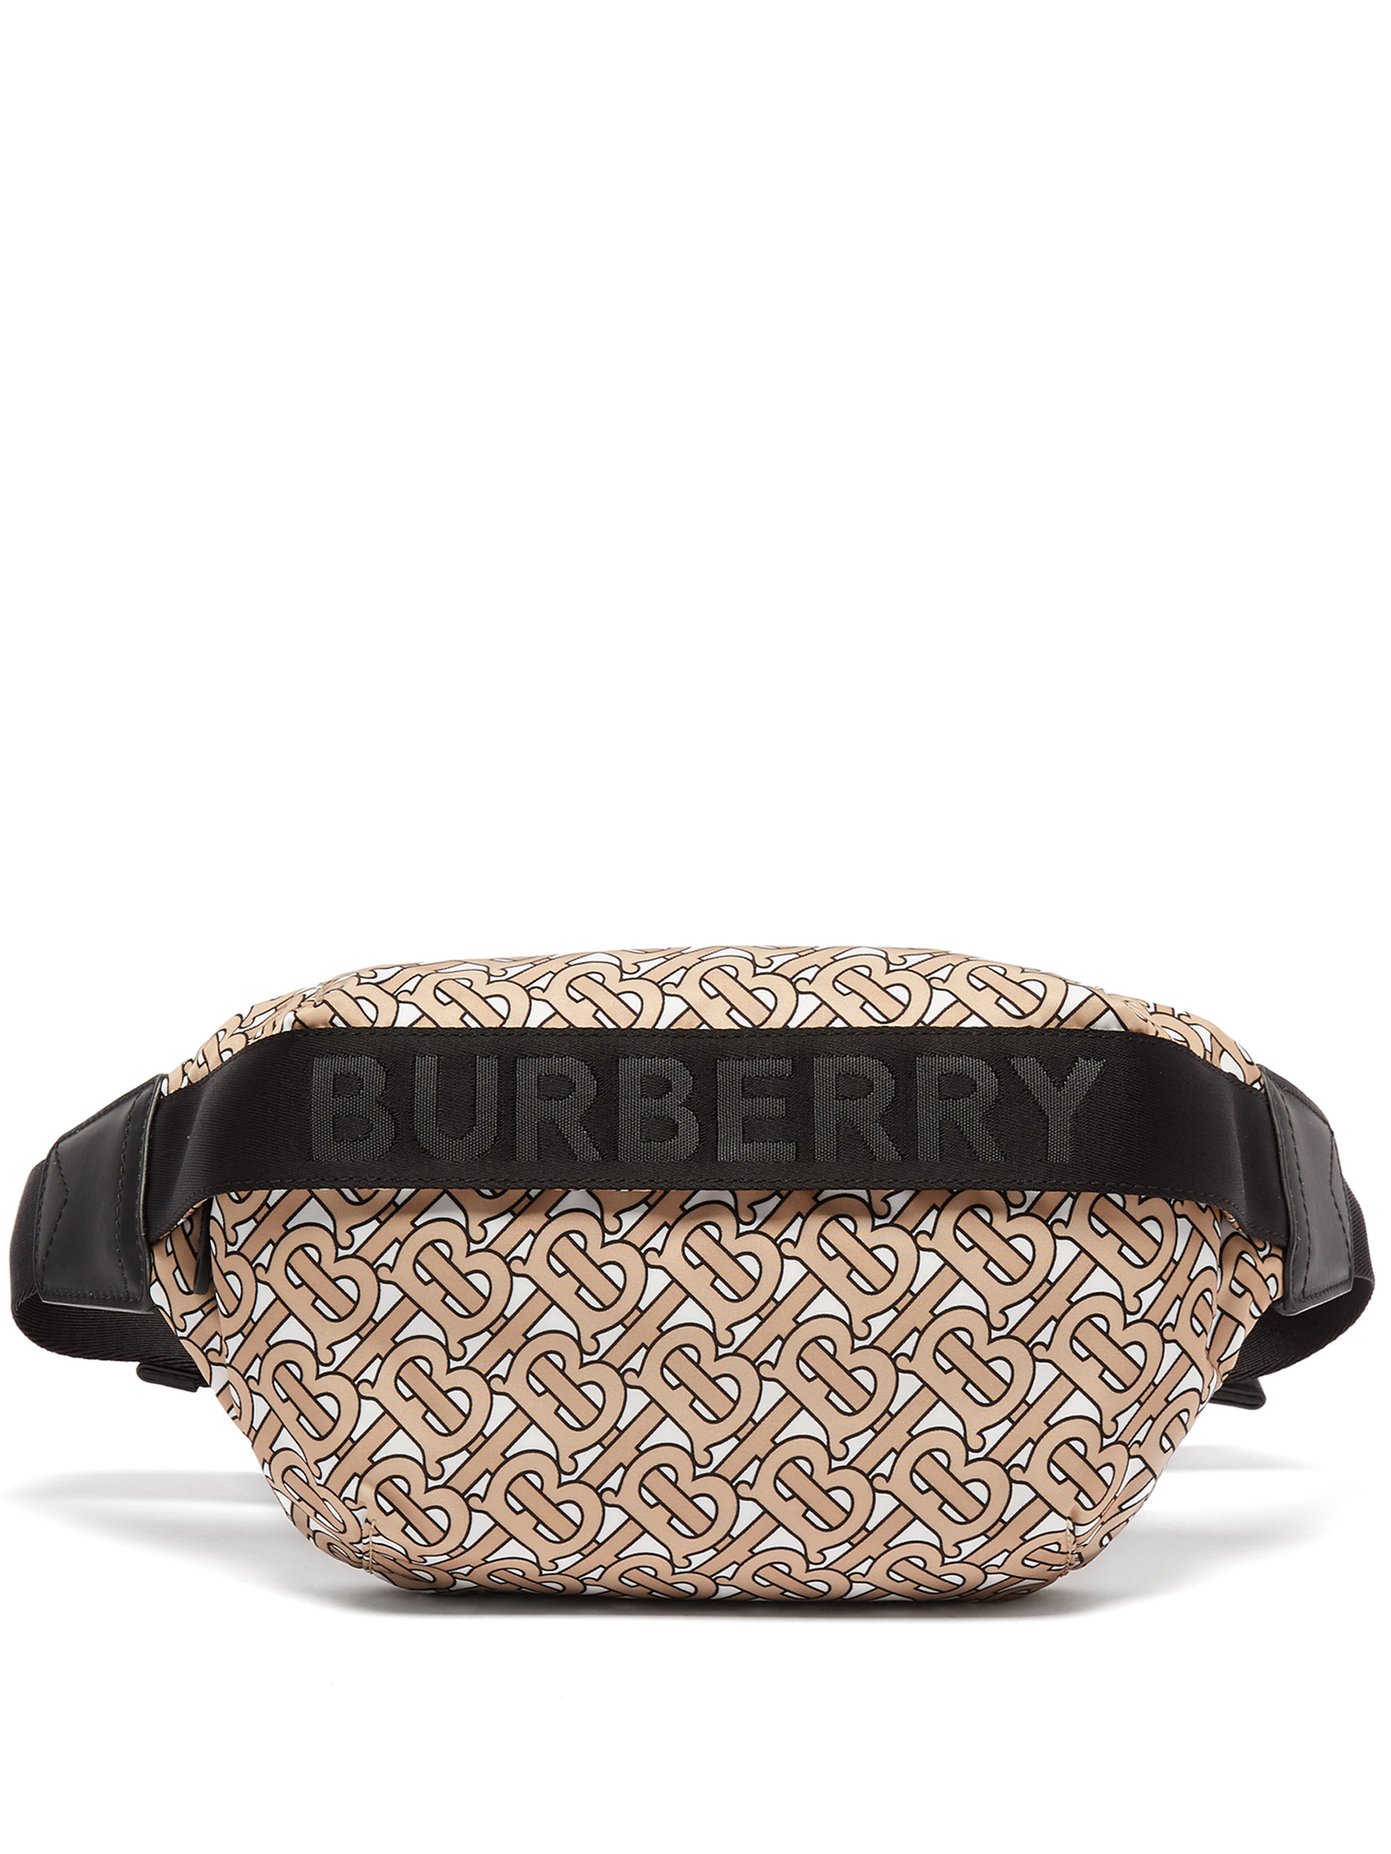 burberry belt bag mens